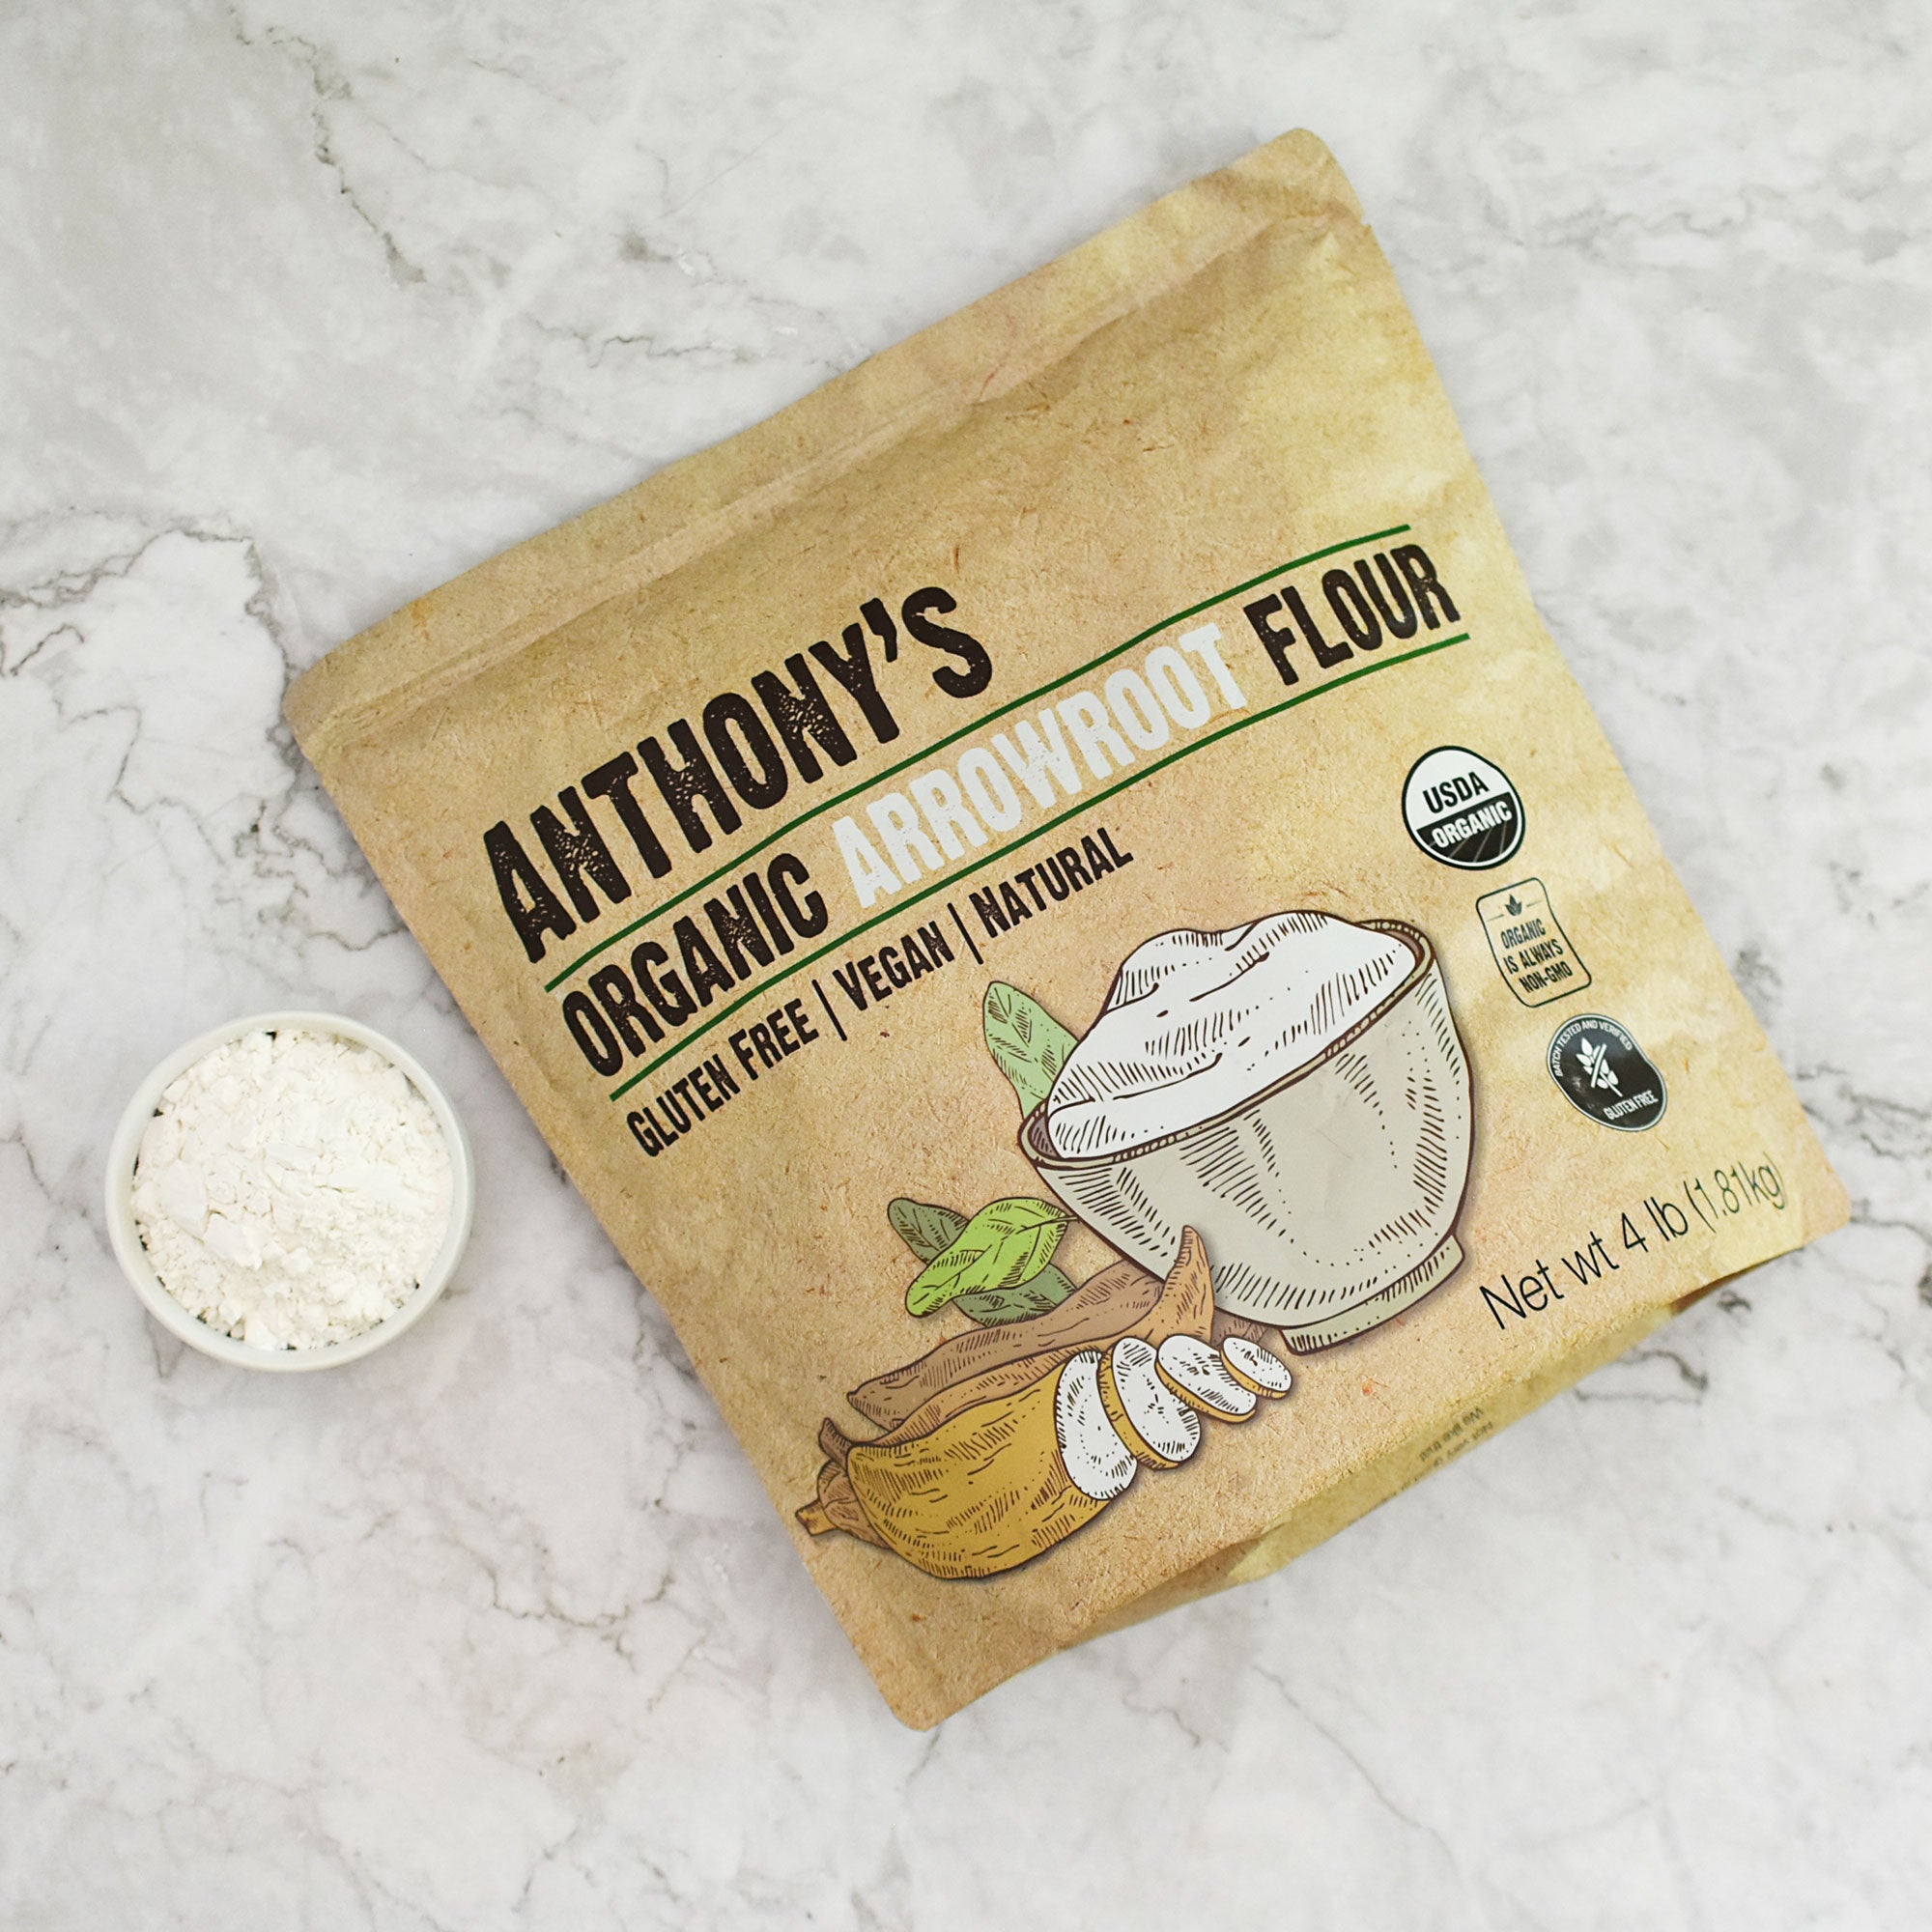 Organic Arrowroot Flour Powder: Gluten-Free